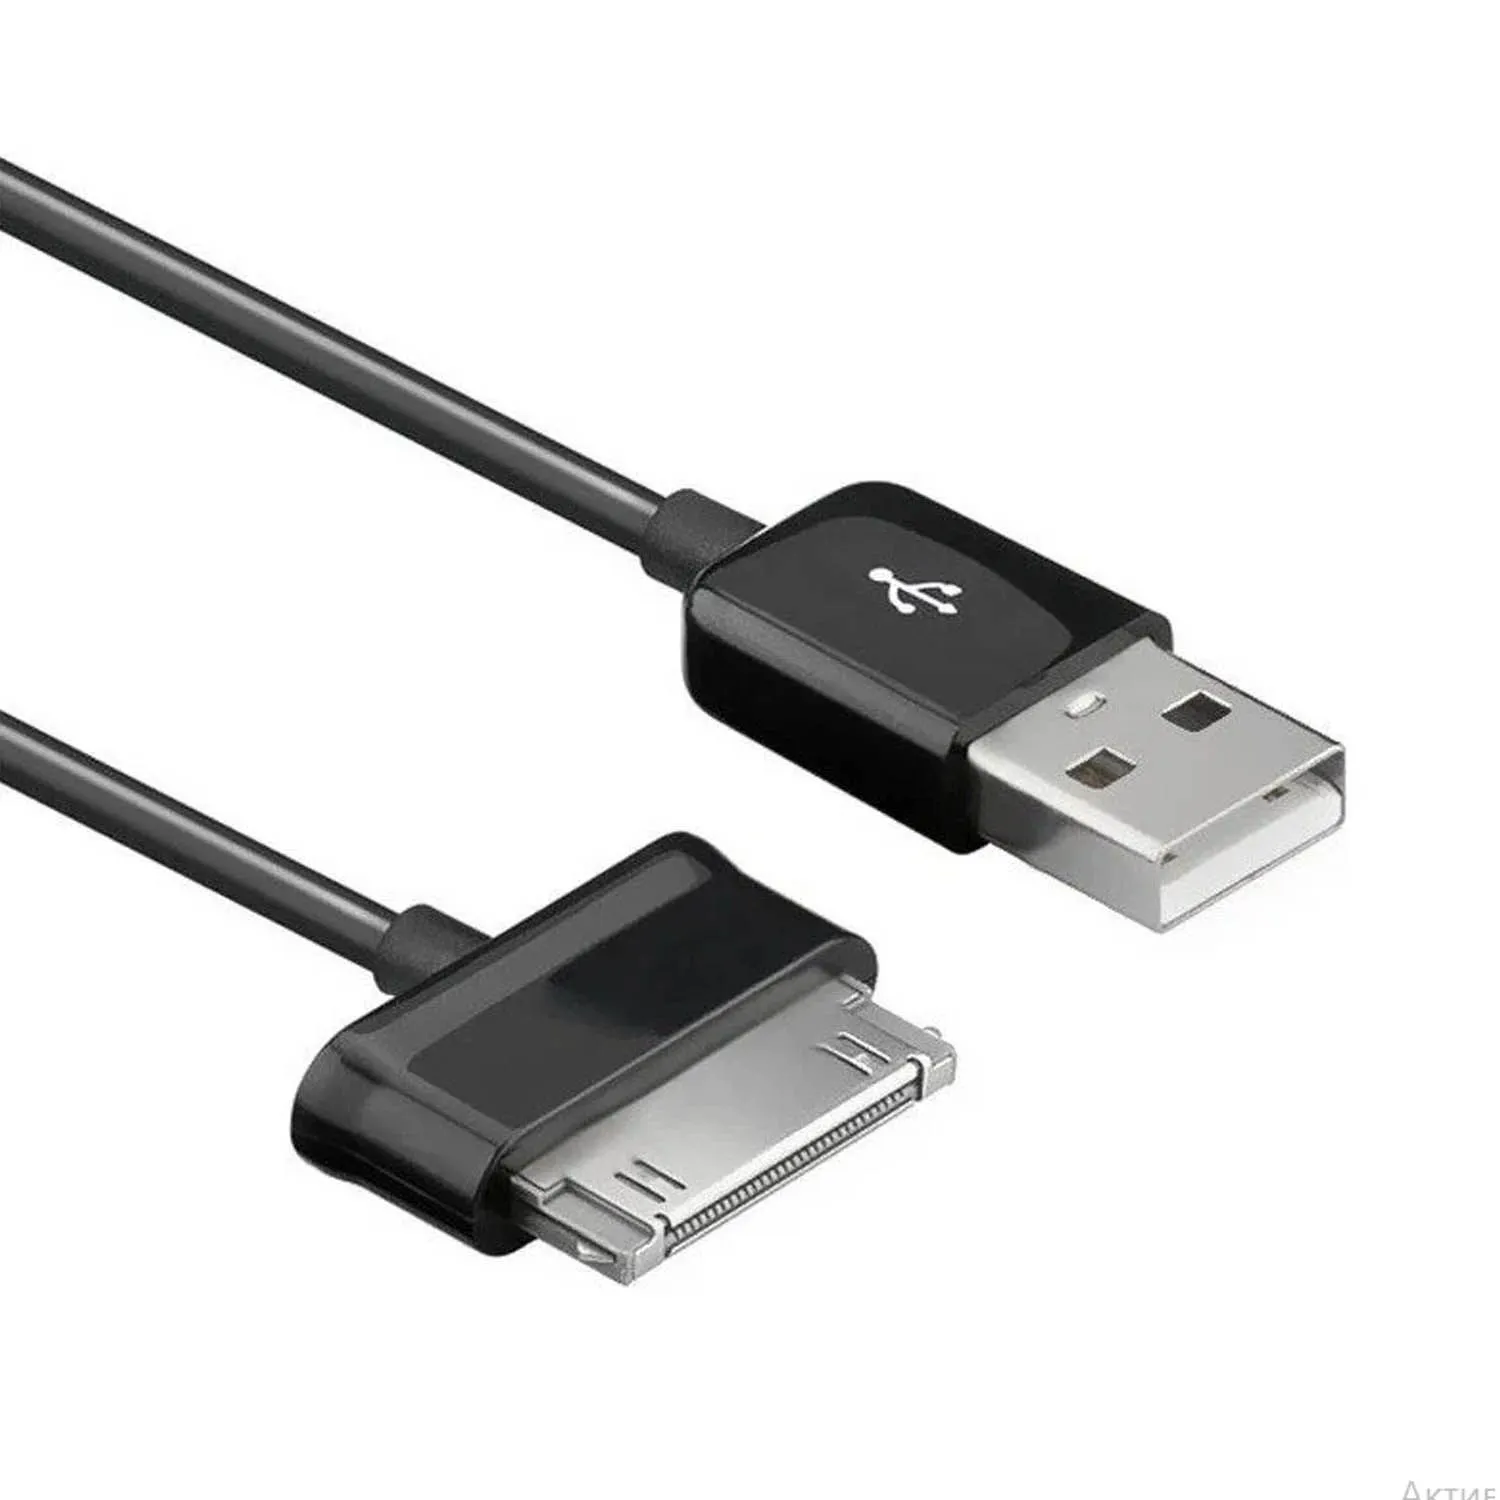 USB Кабель Samsung Galaxy Tab P1000 P1010 P6800 P6810 P6200 P6210 P7510 (черный)